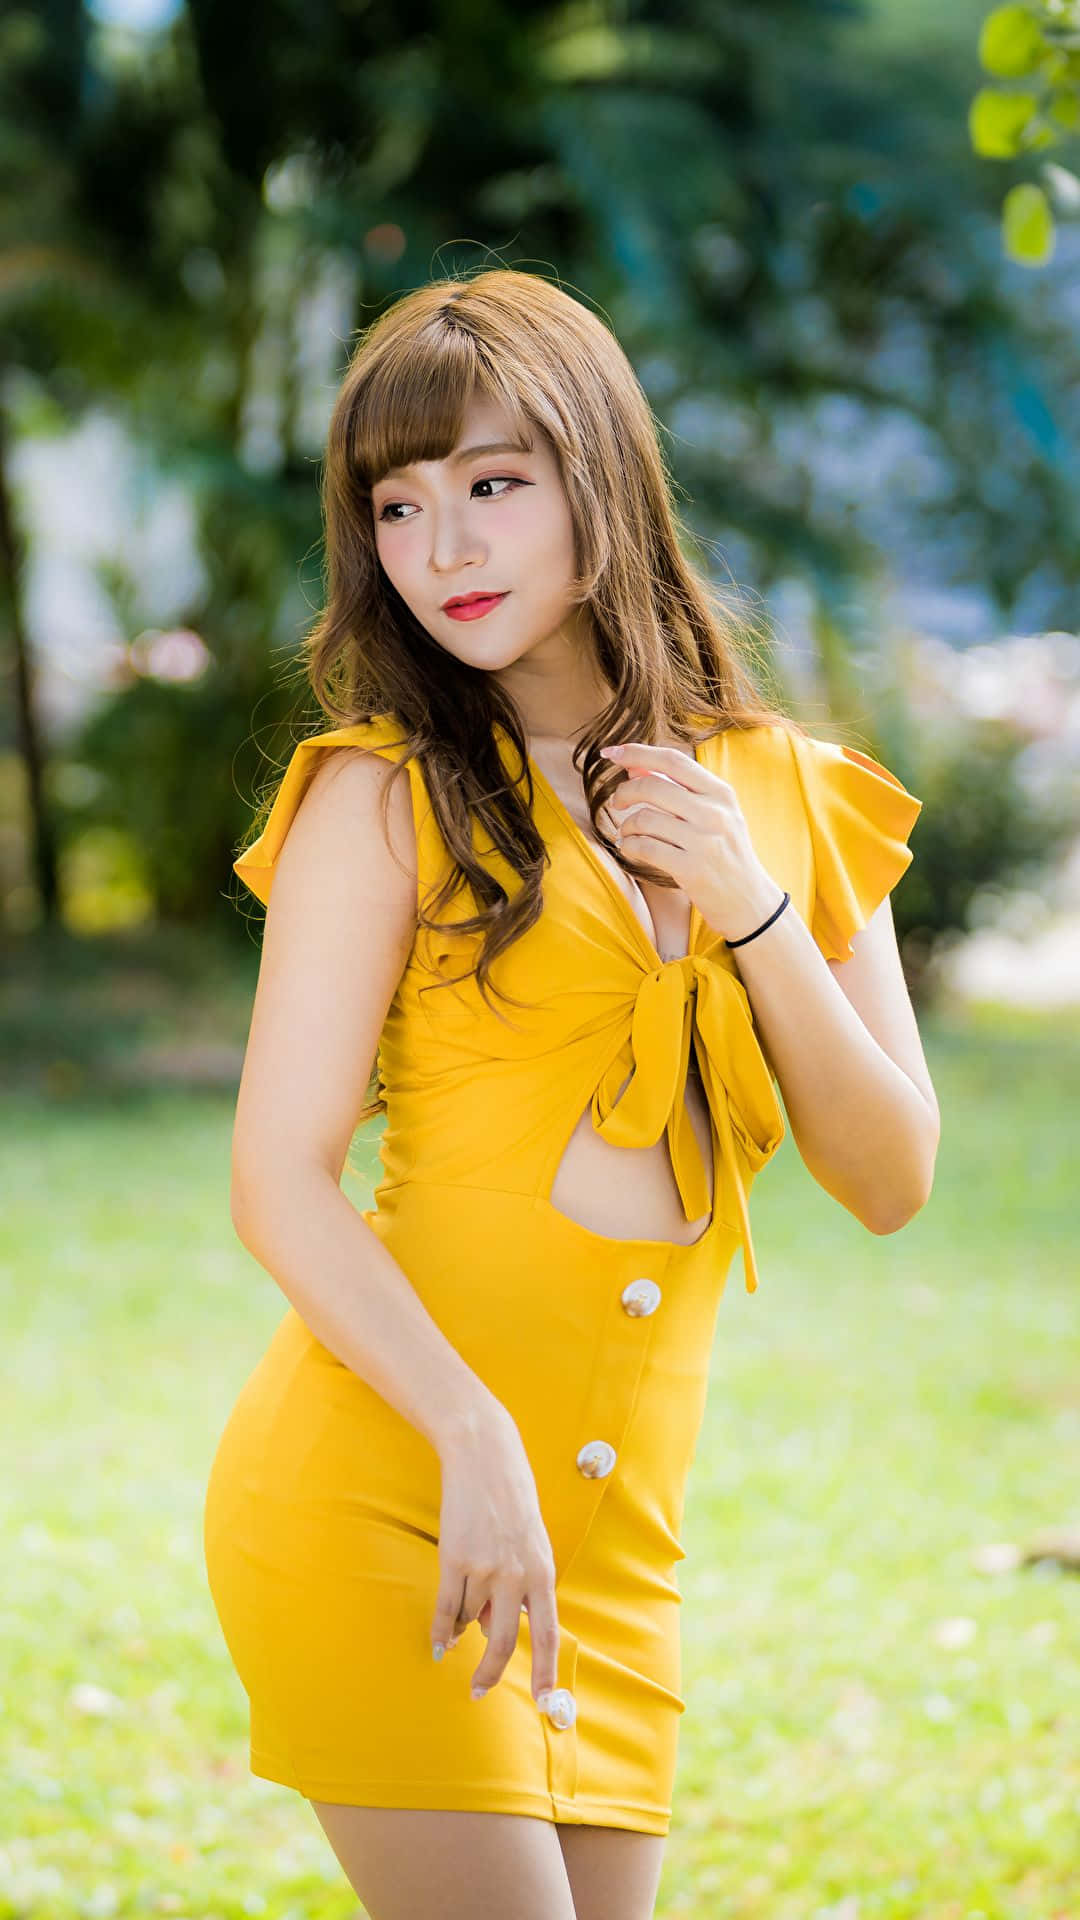 Elegant Woman in a Stunning Yellow Dress Wallpaper